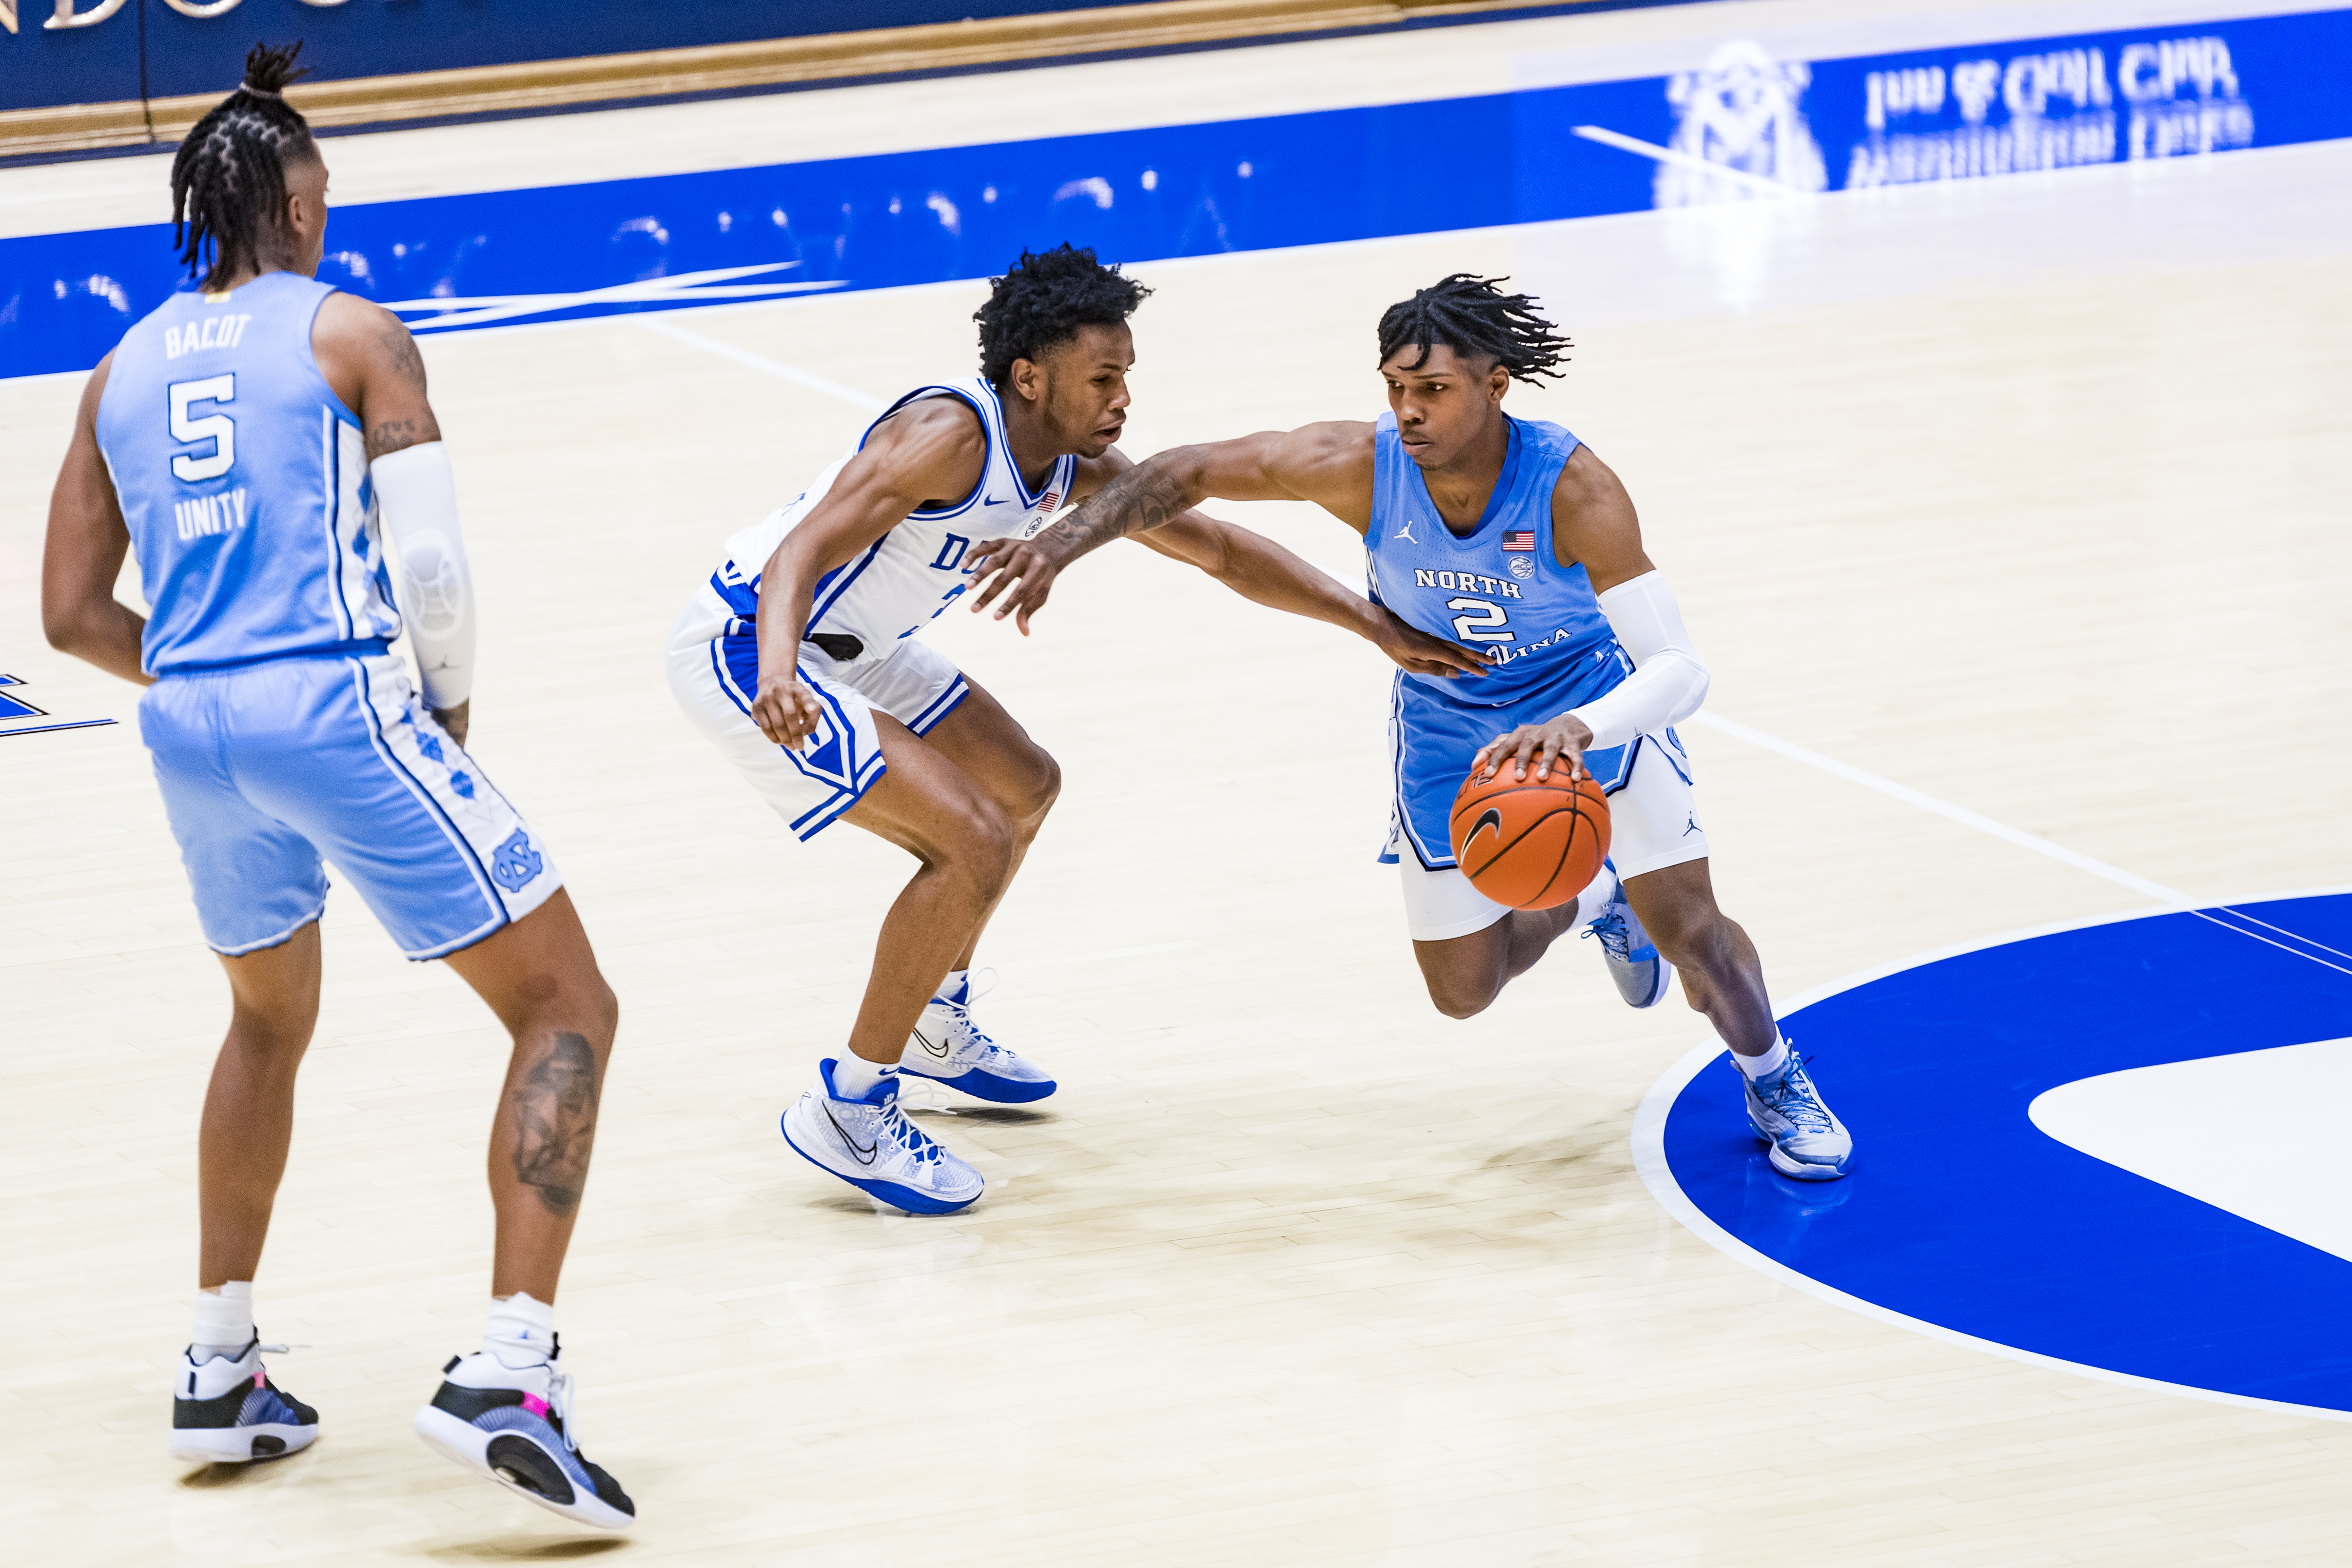 UNC basketball vs. Duke at Cameron Indoor Stadium photos